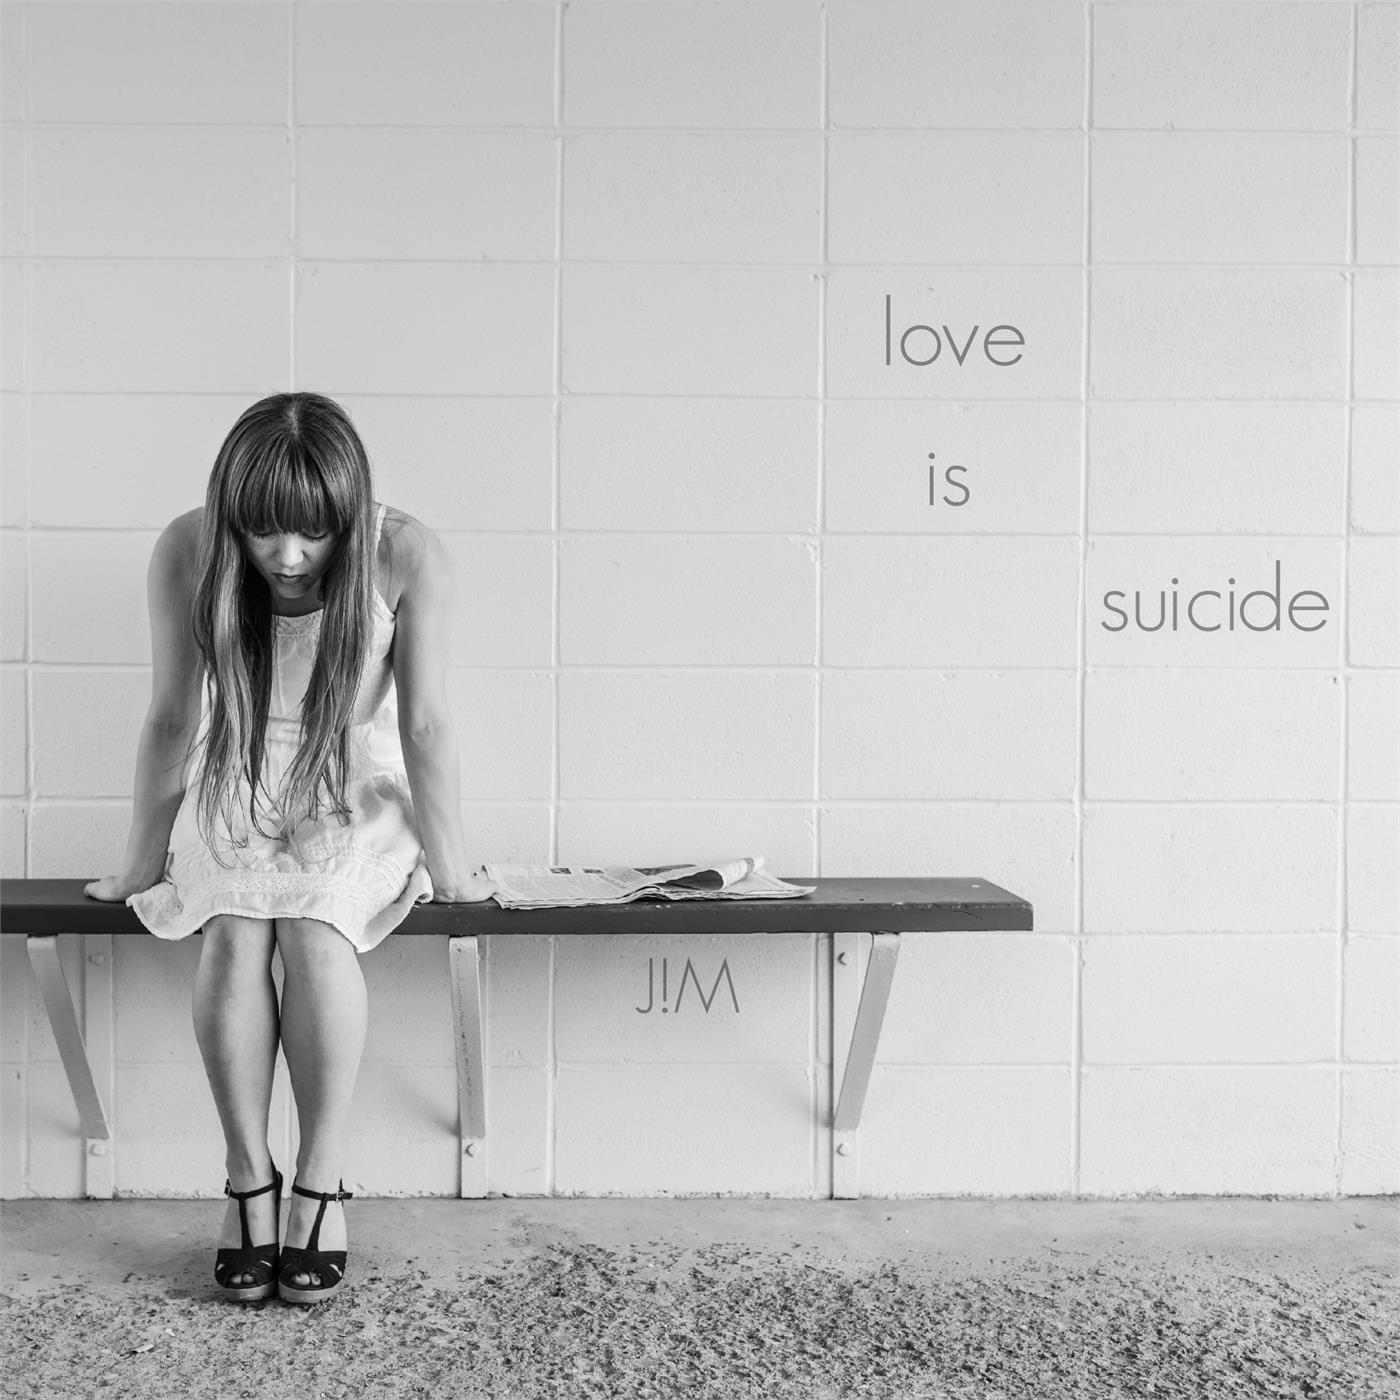 Love is suicide